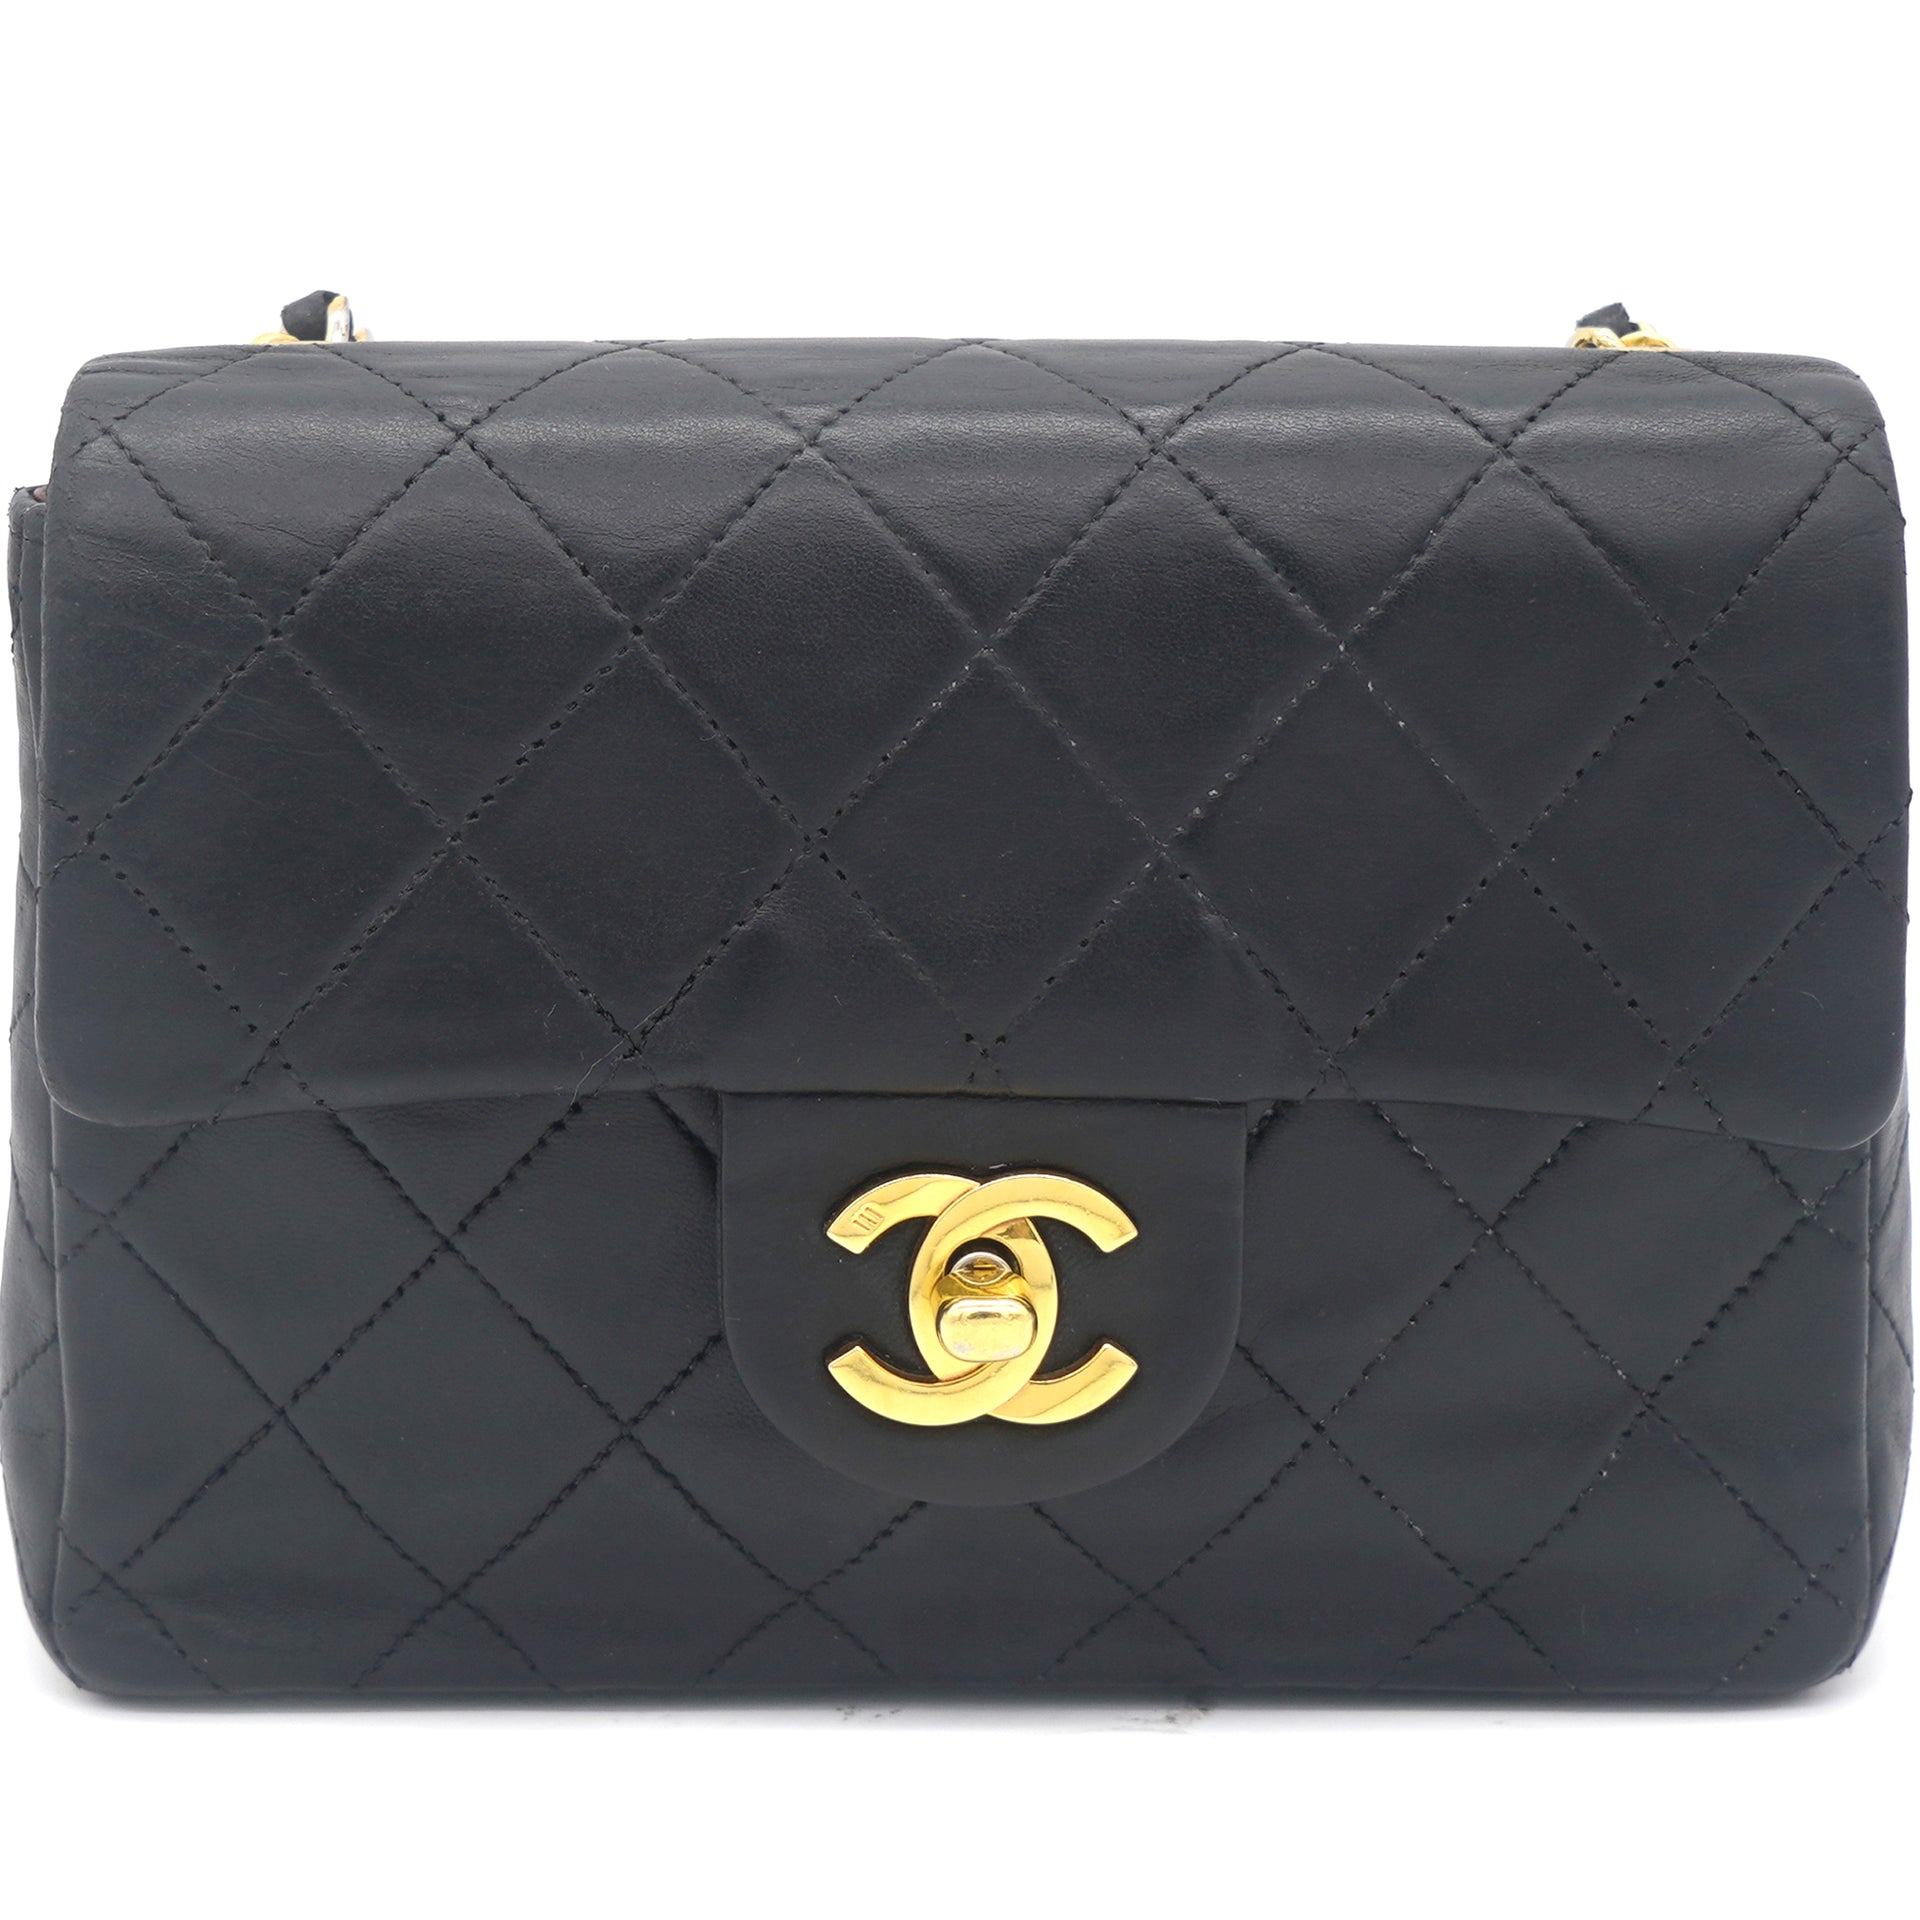 CHANEL Handbag Black Quilted Reissue 31 Rue Cambon Flap Bag